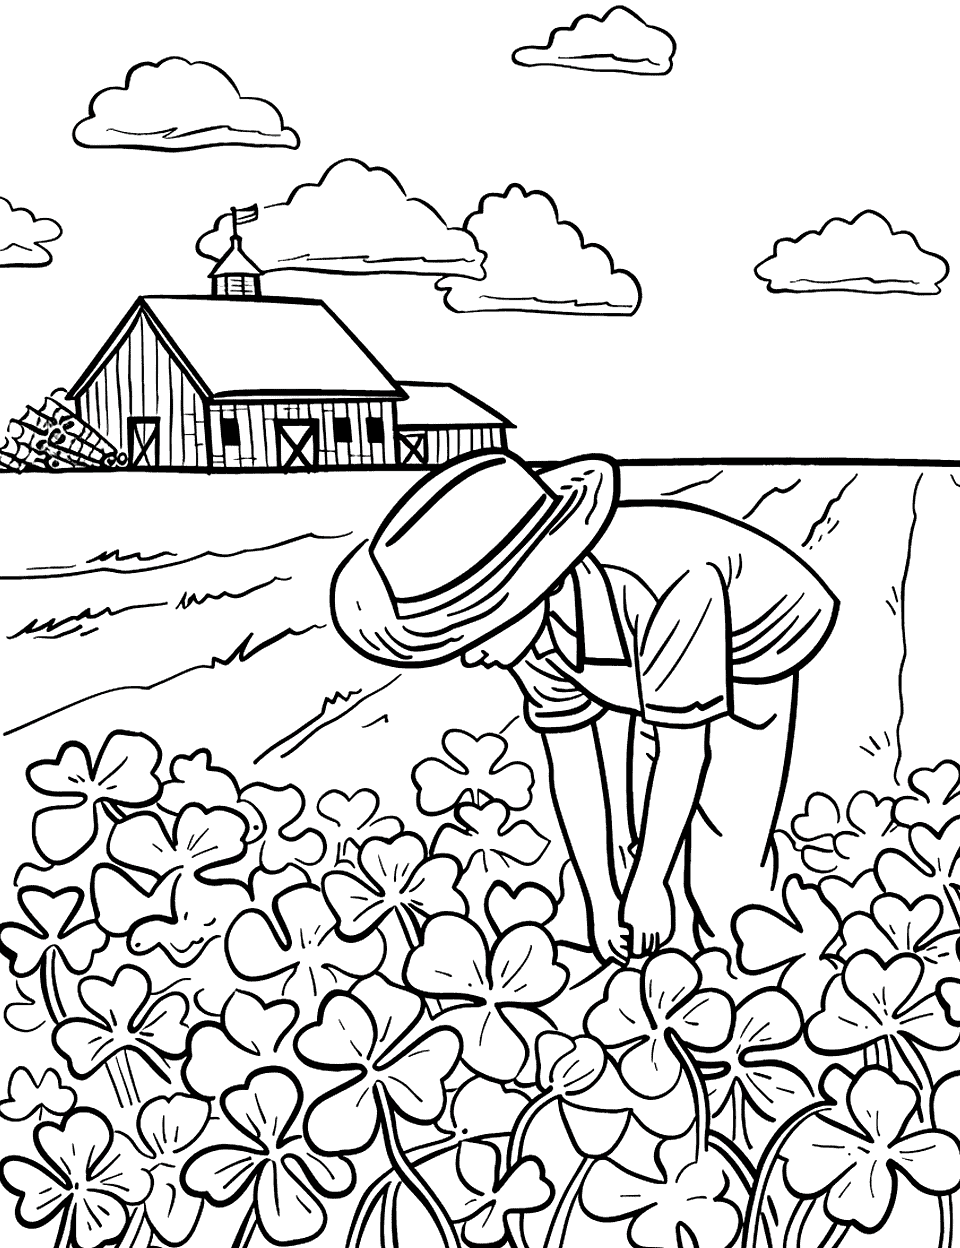 Farmer Planting Shamrocks Shamrock Coloring Page - A farmer in a field, planting shamrocks, with a barn in the background.